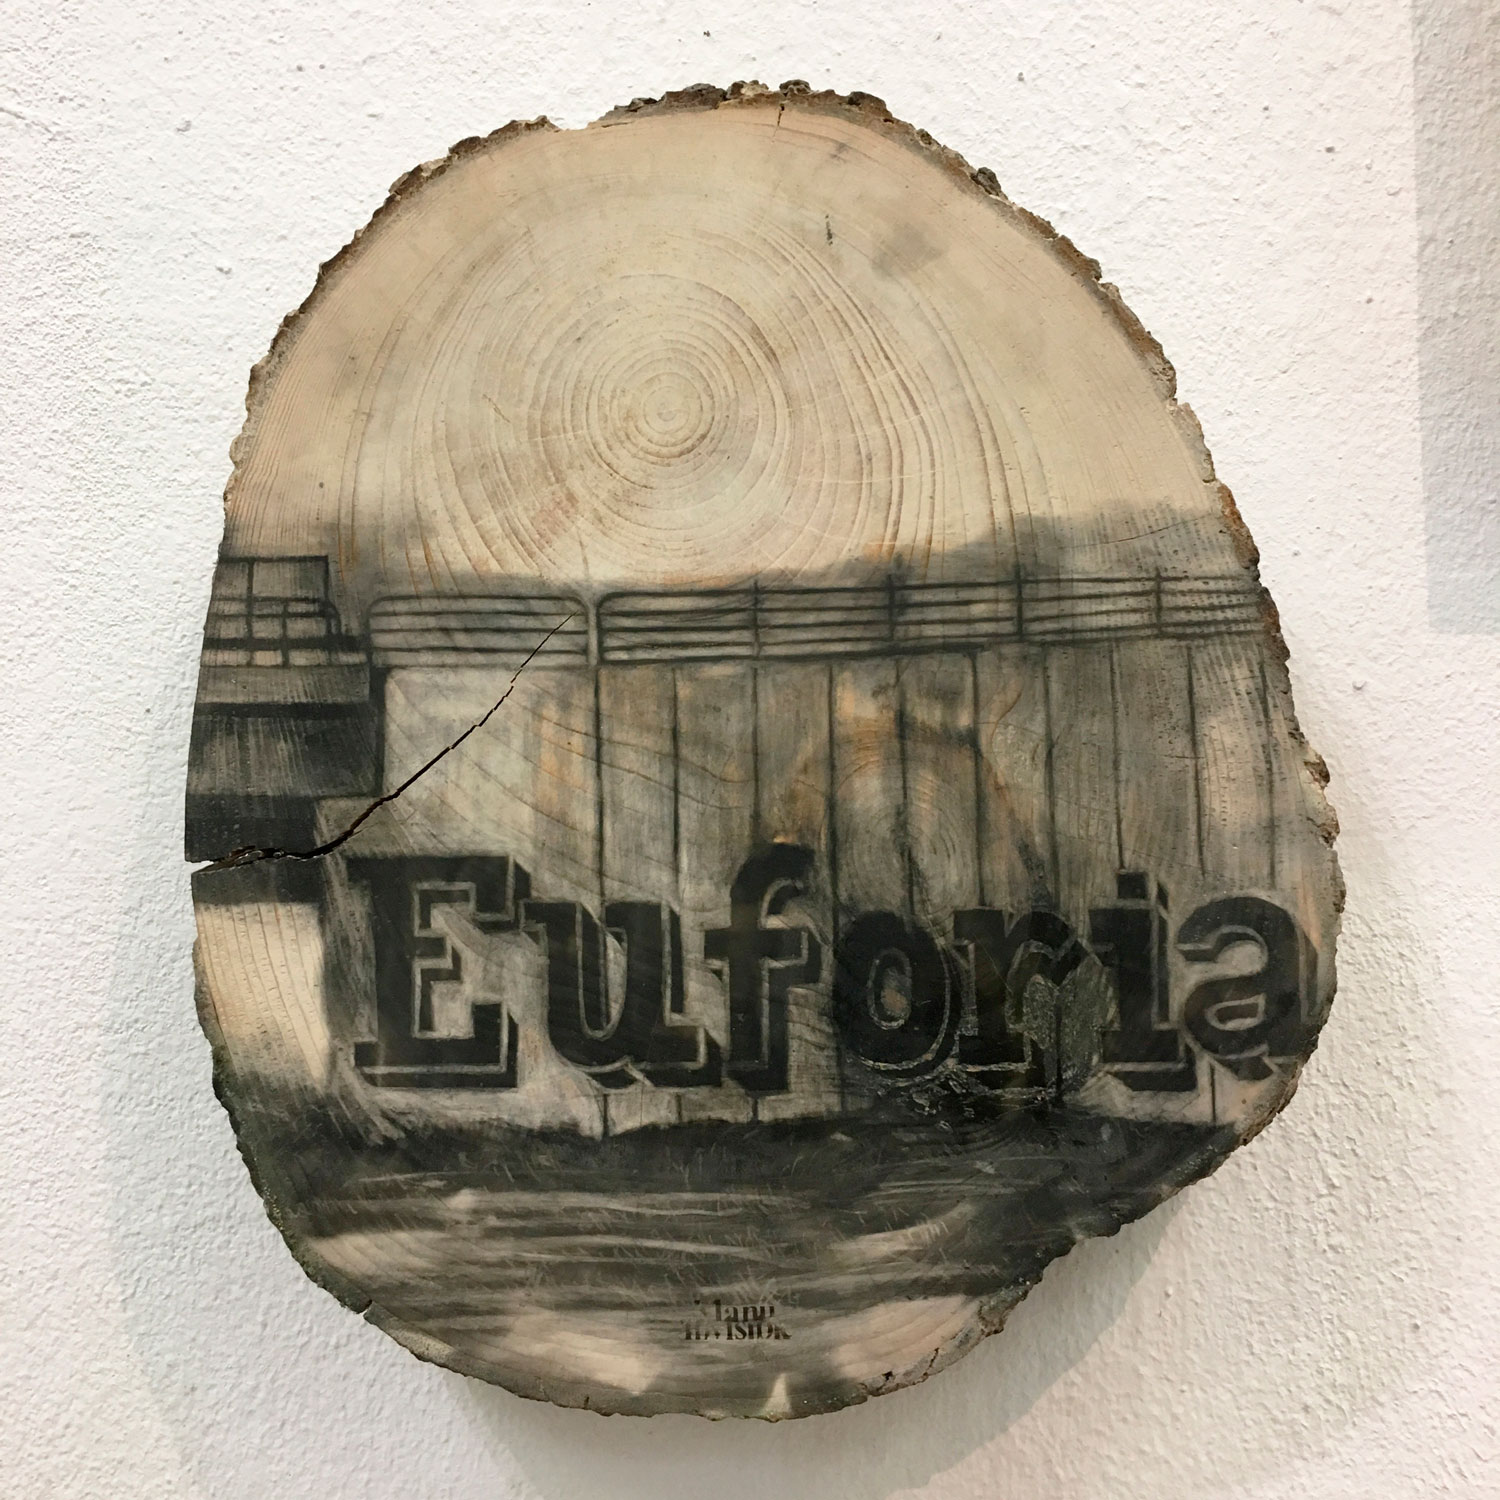 “Euforia” Fumo su abete 95 cm (circonferenza) x 7 cm 2017